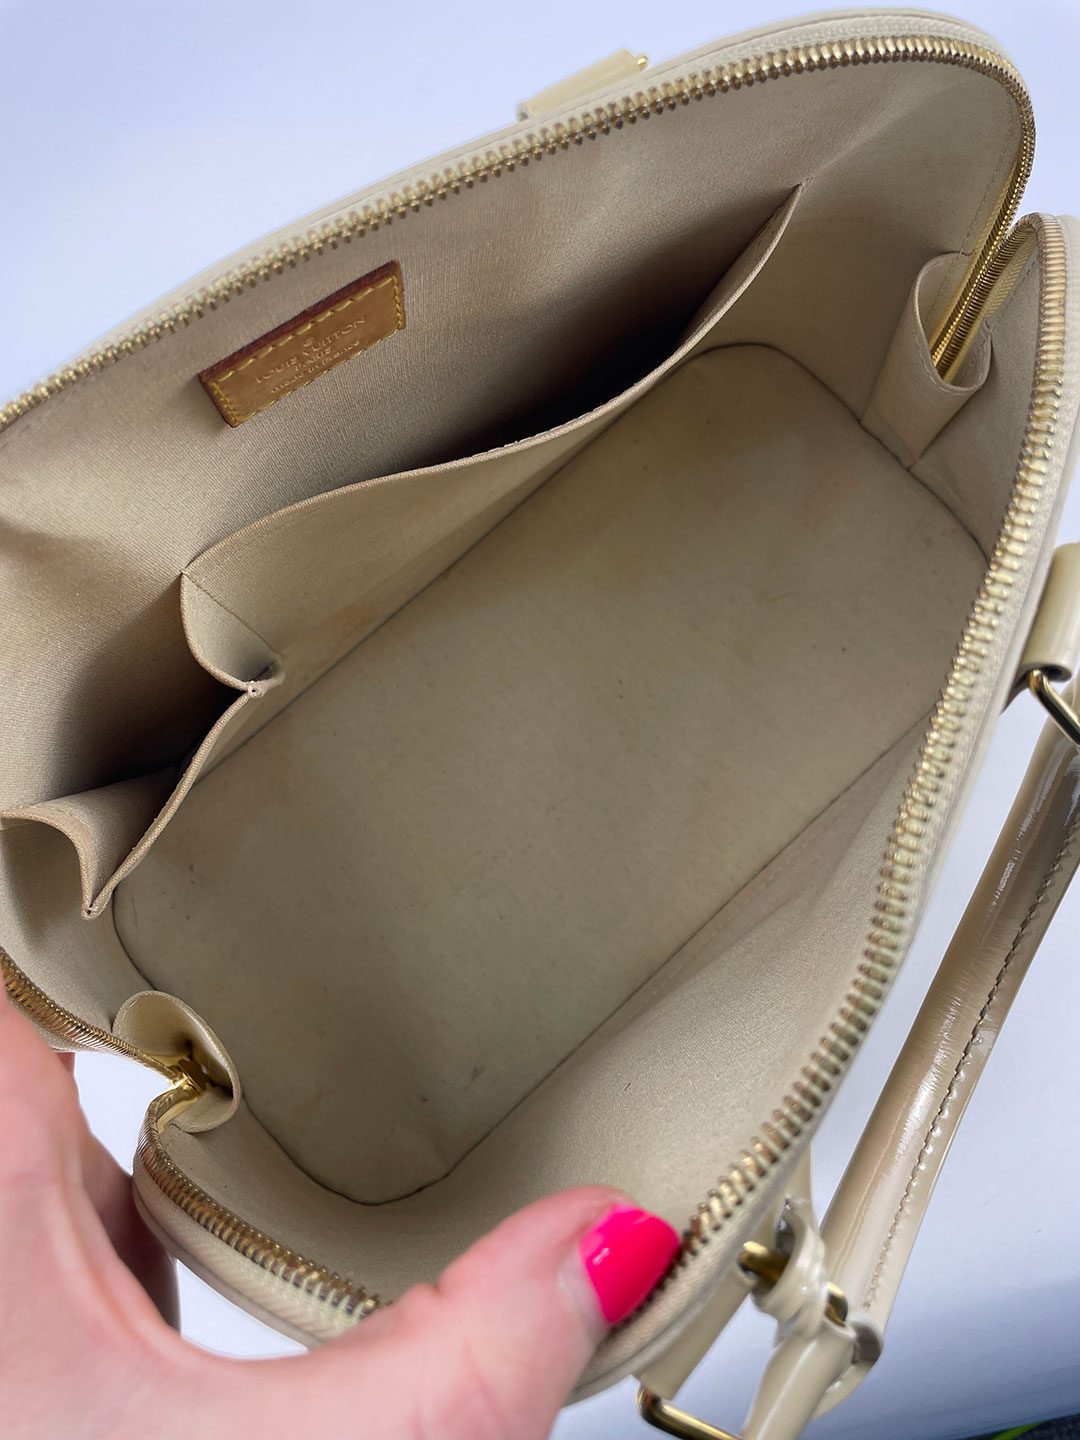 Alma Bb Handbag  Buy or Sell your Louis Vuitton women's bags